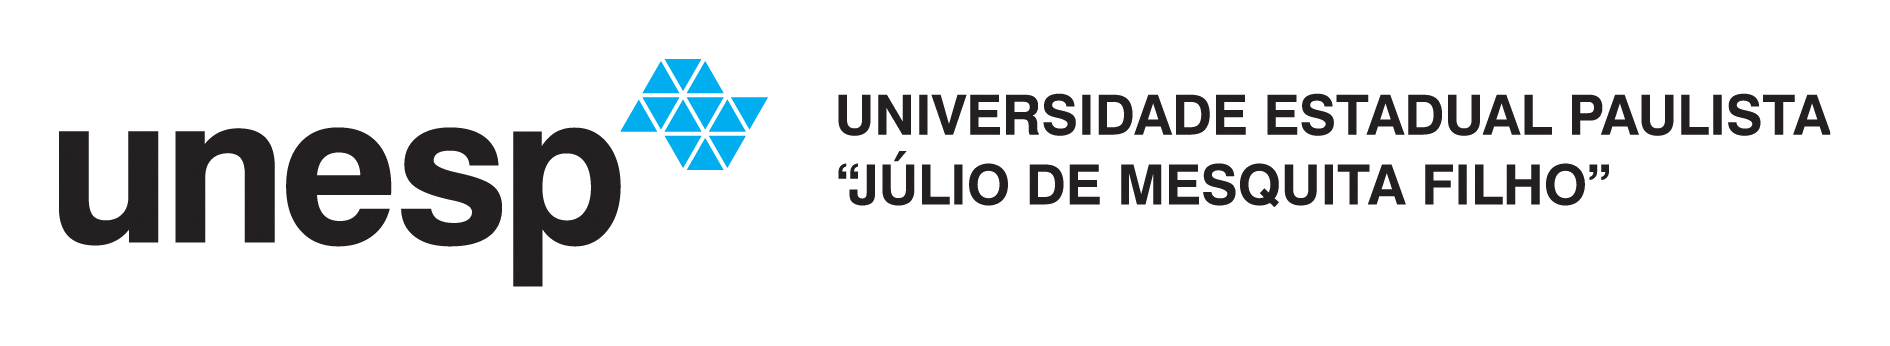 Logotipo da UNESP